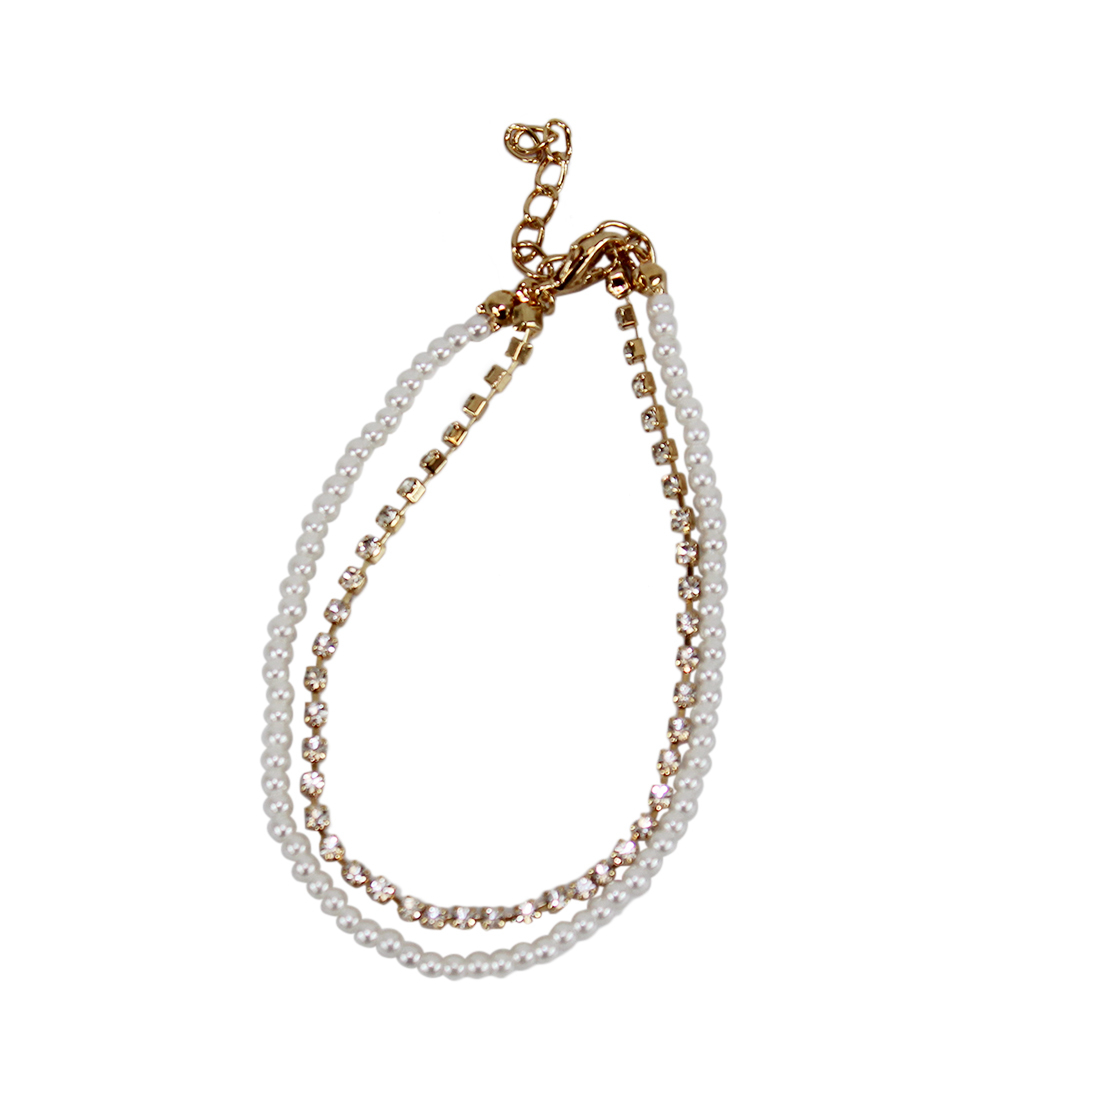 Diamond And Pearls Chain Design